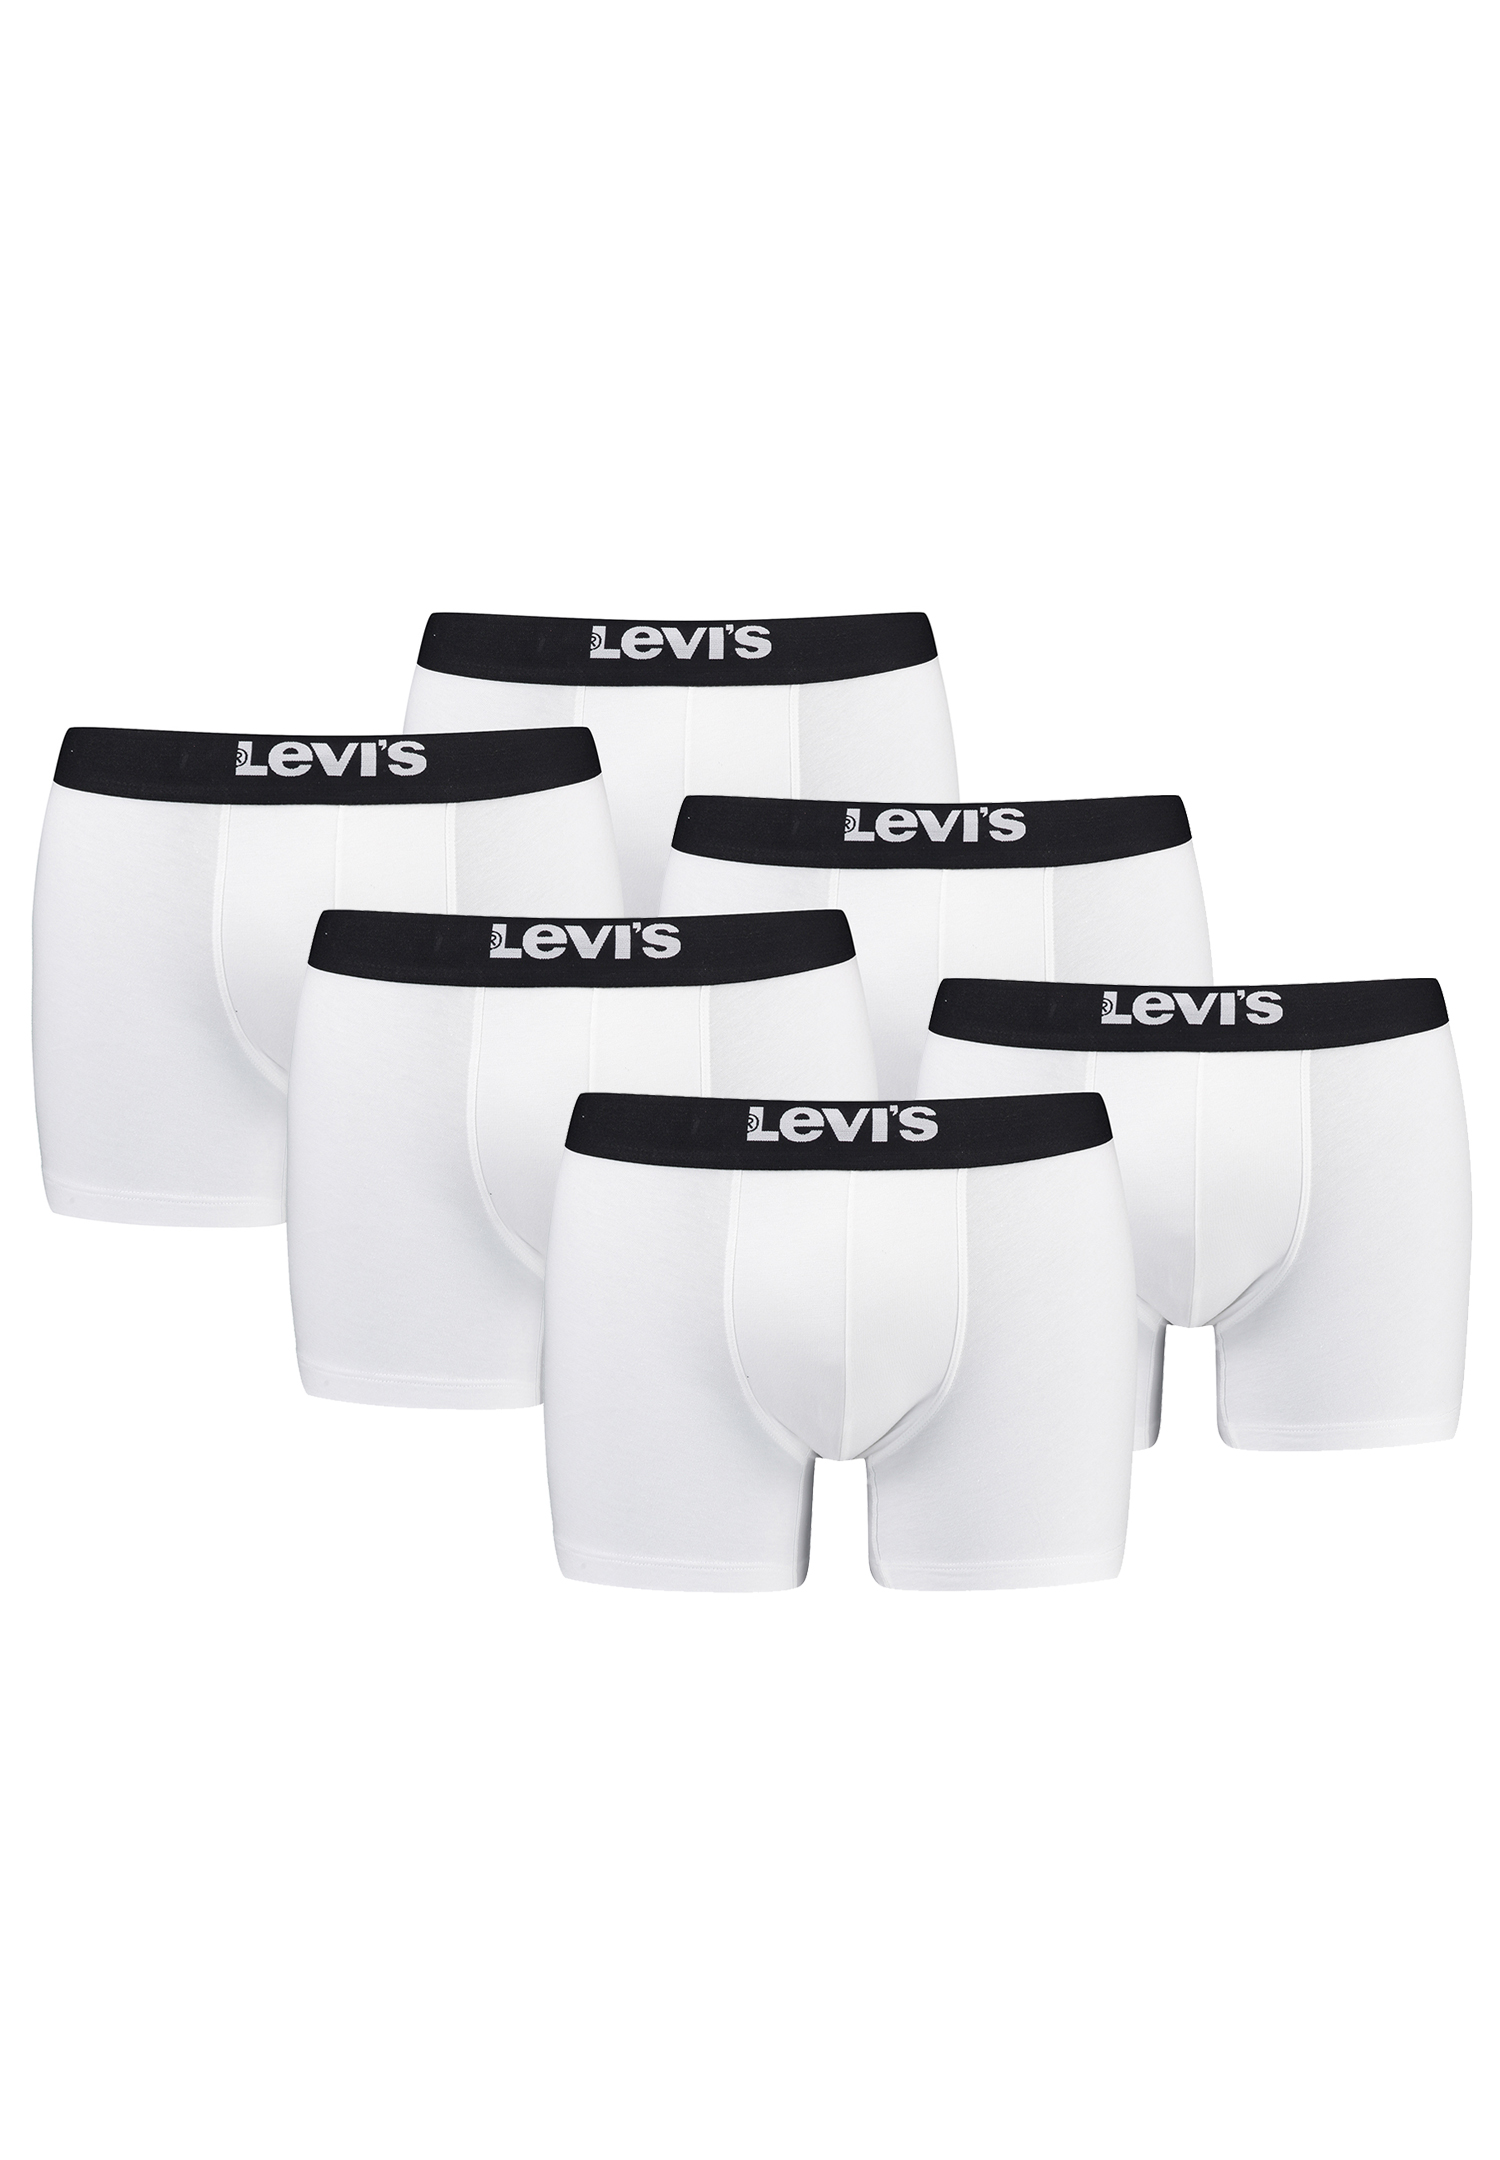 Levi's Herren Levi's Men's Solid Basic Boxers (6 Pack) Boxer Shorts